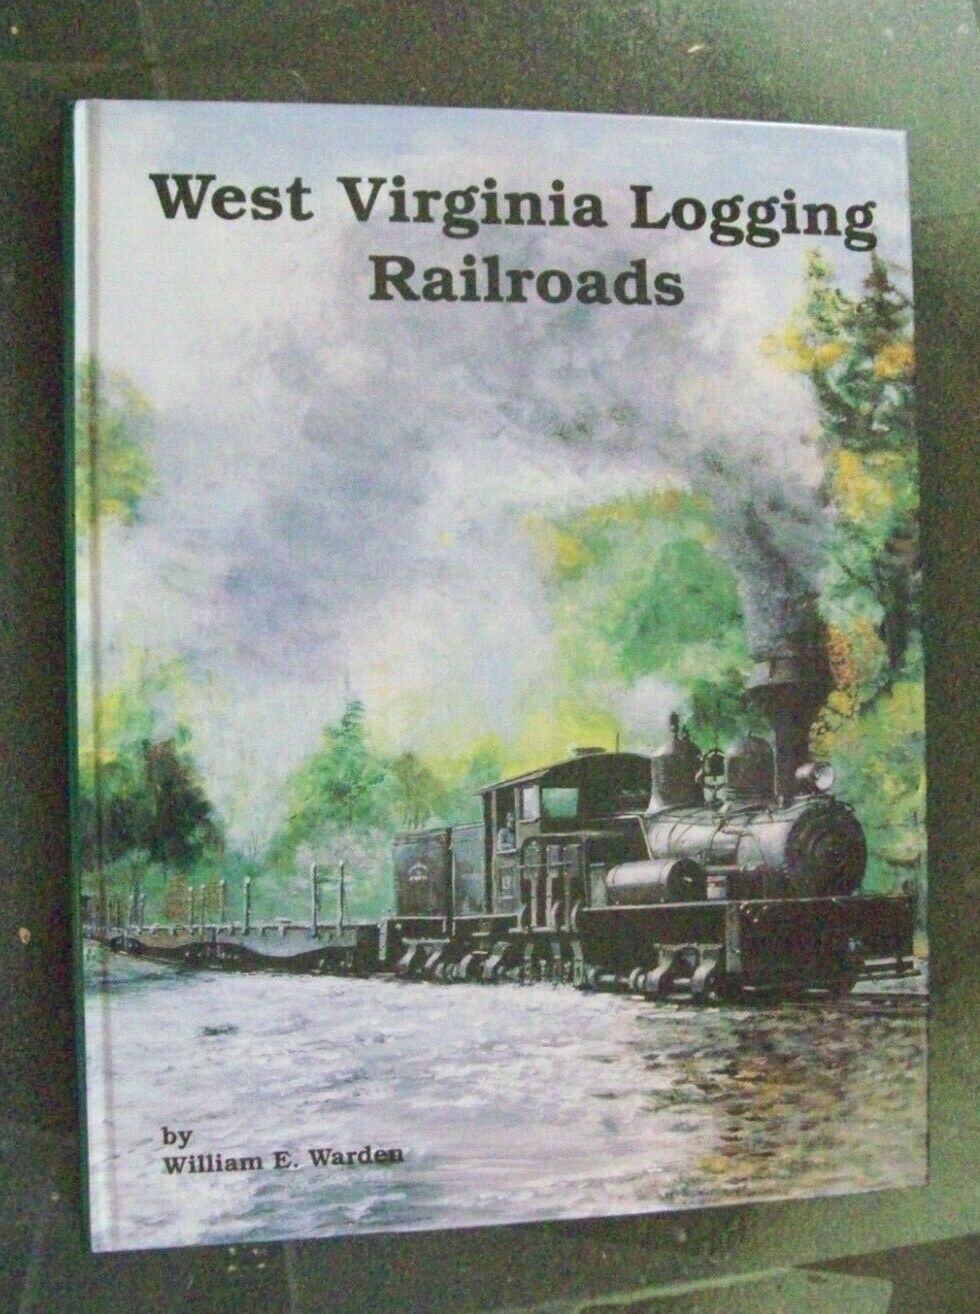 West Virginia Logging Railroads - 3rd Print 1996 - Warden - Hc Great History Pix